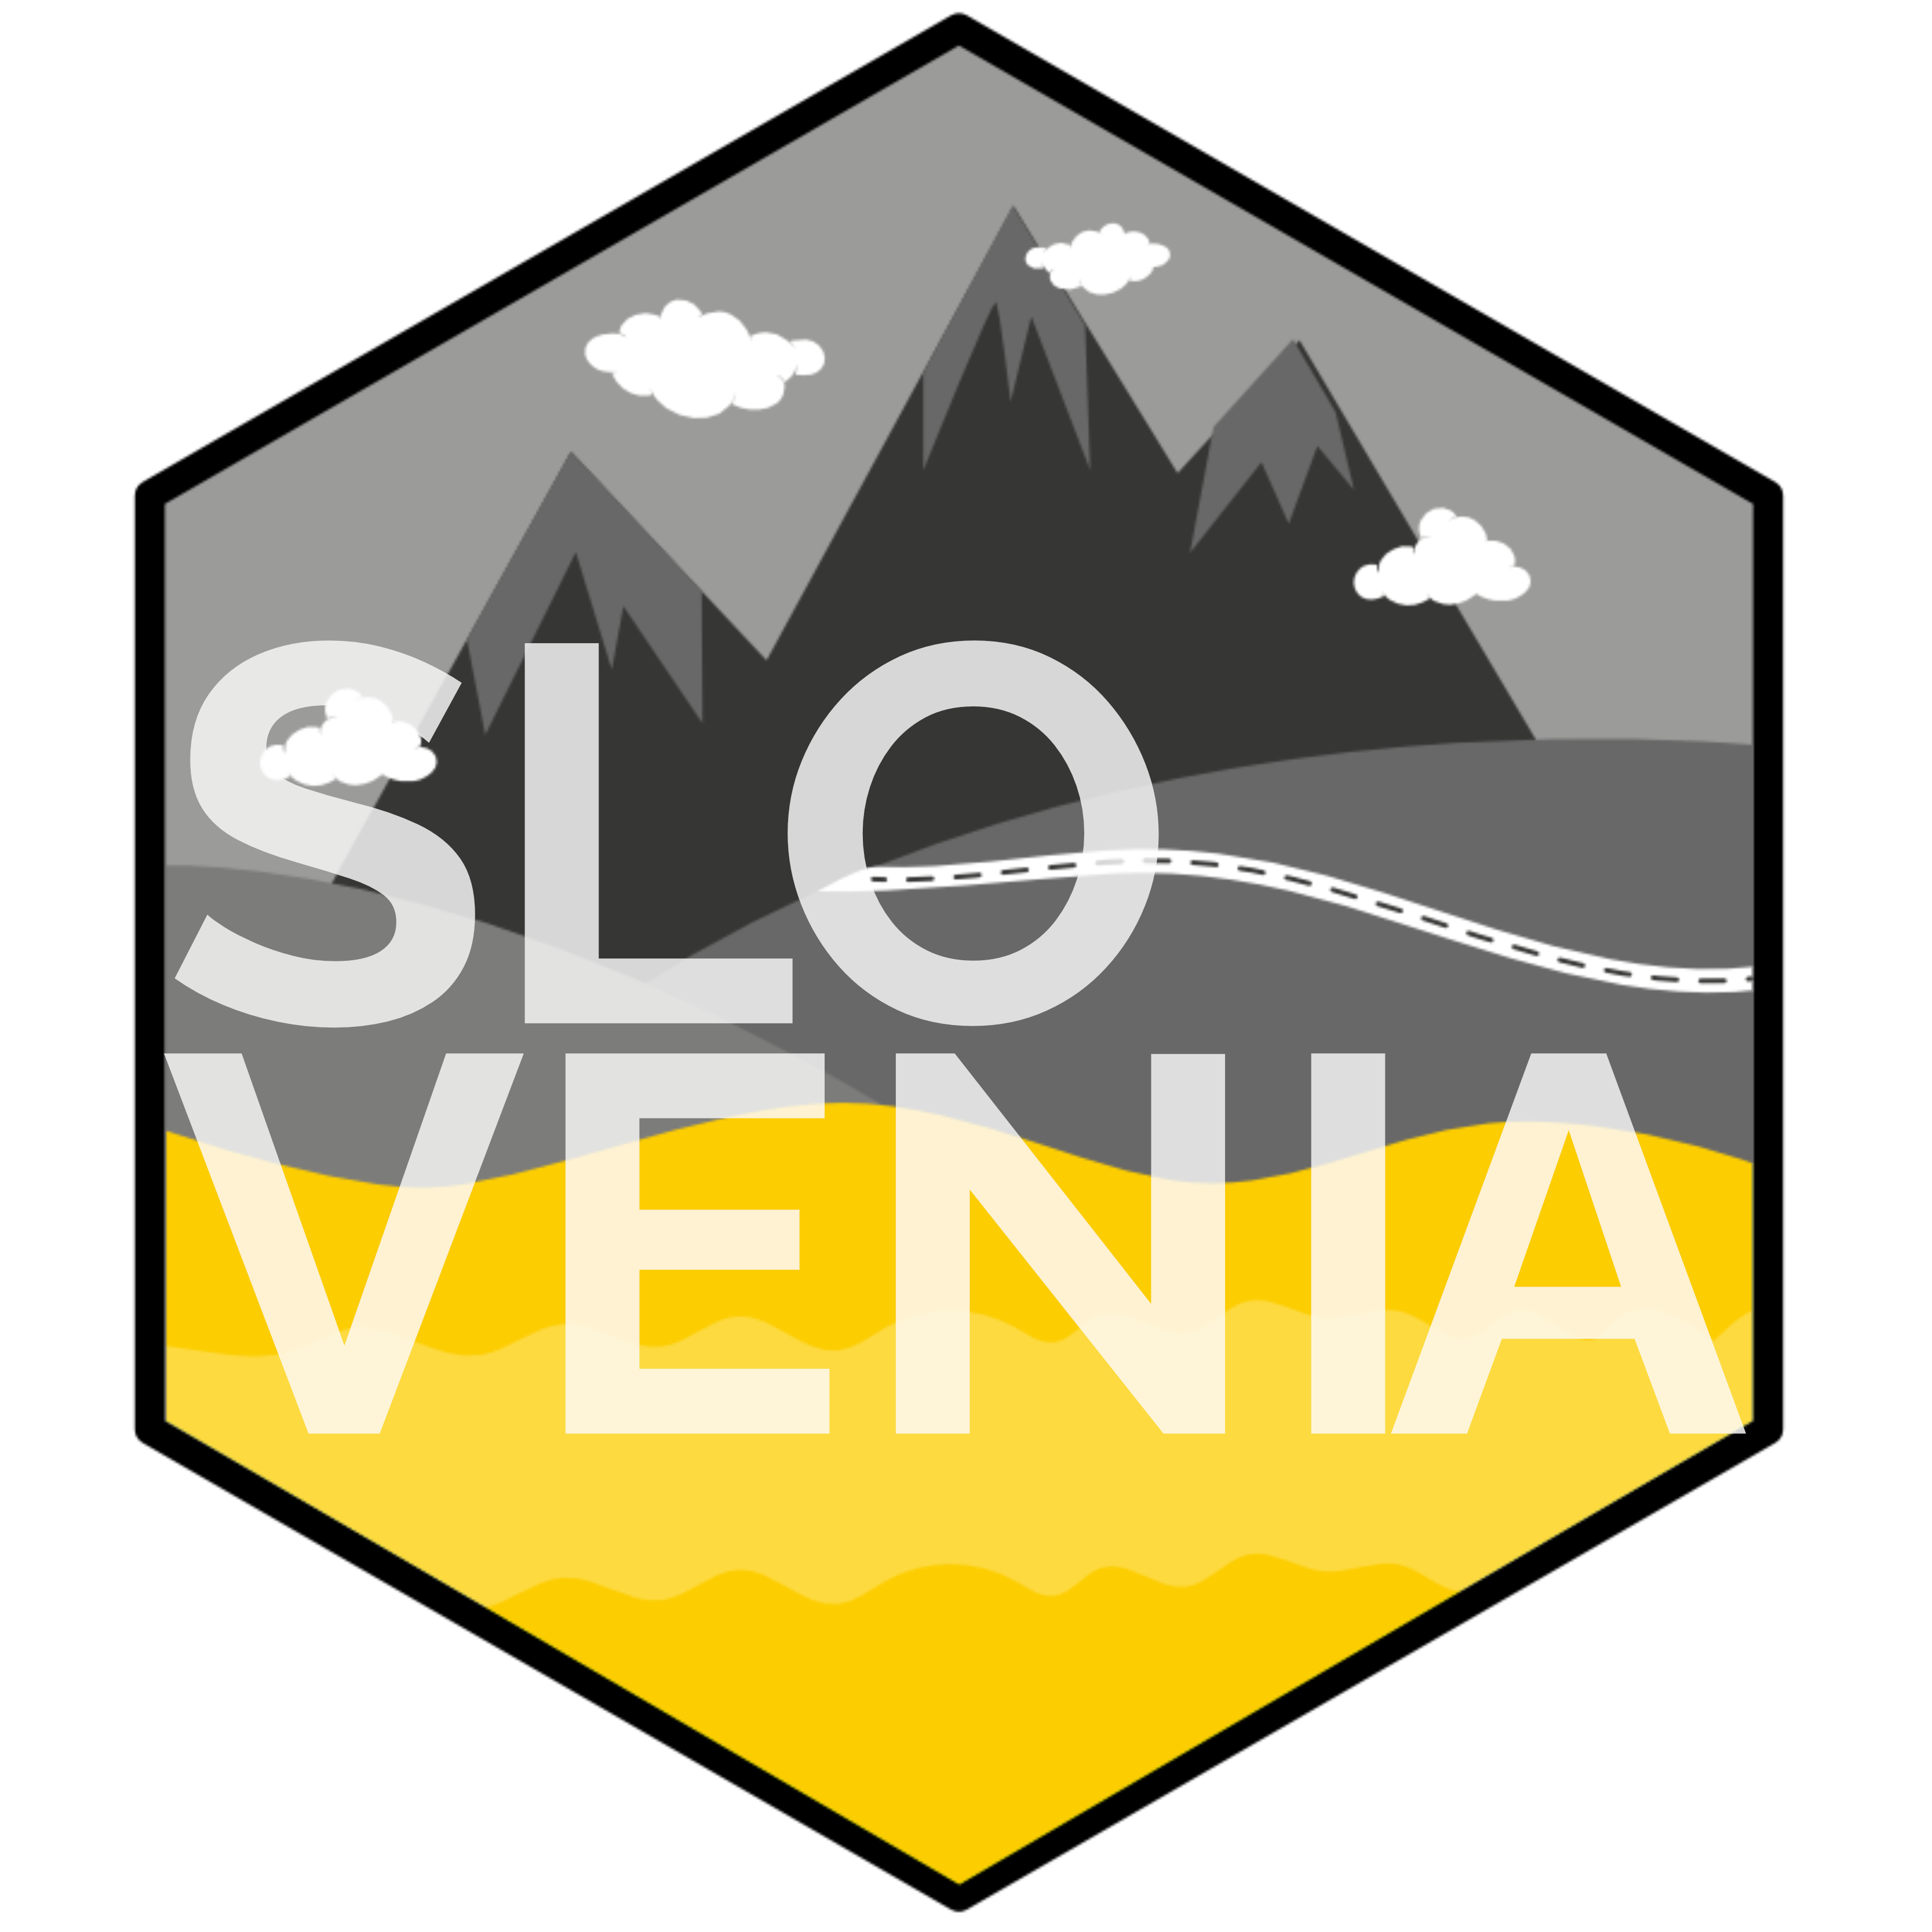 EXPLORE SLOVENIA